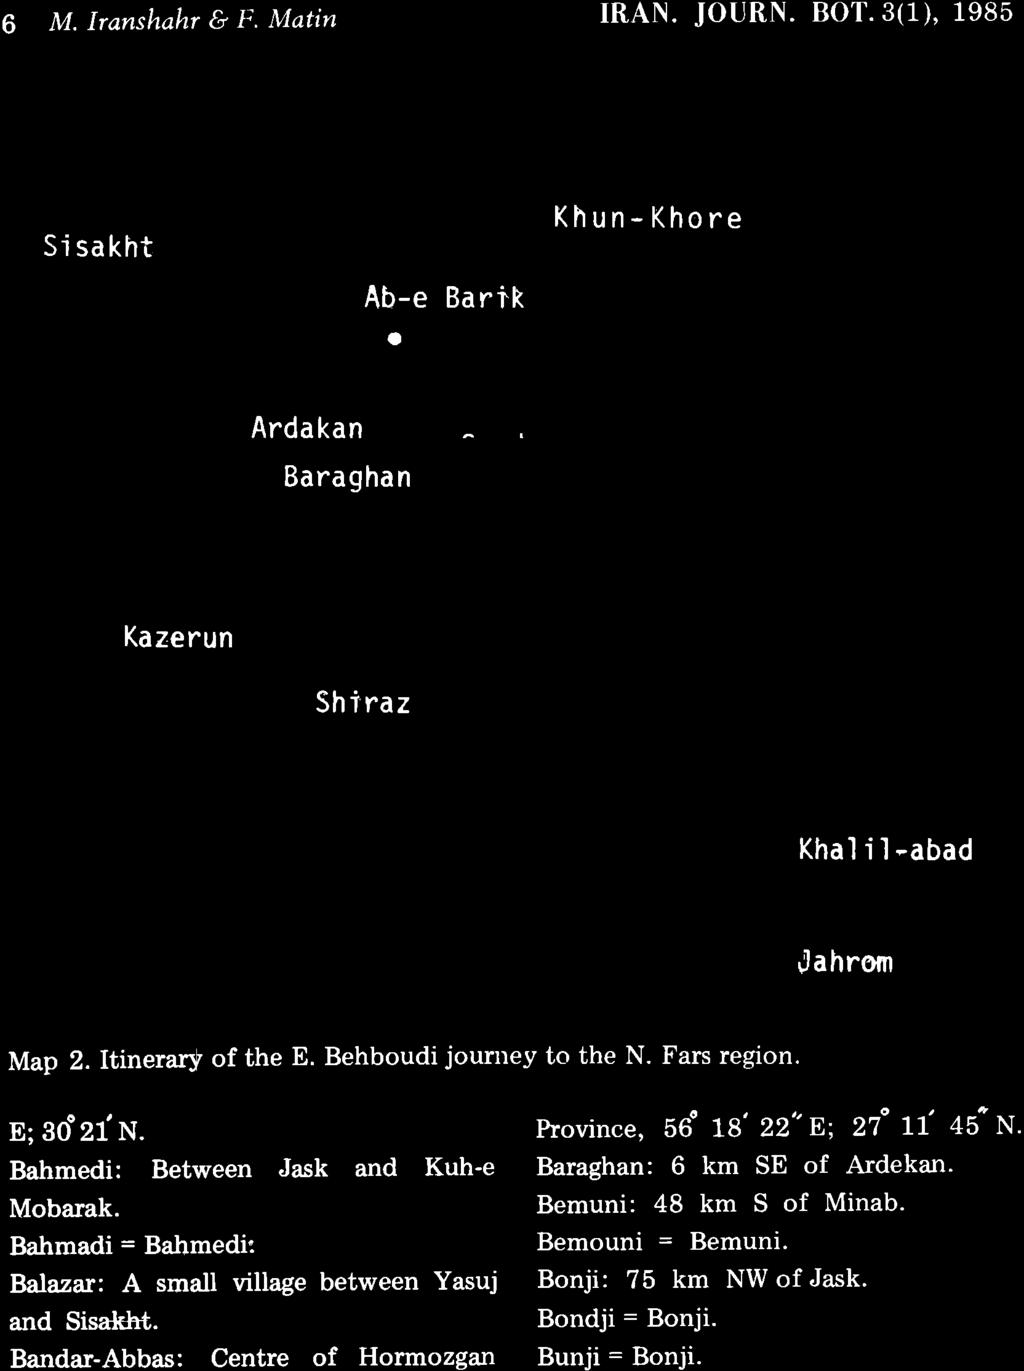 6 M. Iranshahr E 11' Matin Si sakht Ab-e Barik a Khun-Khore Ardakan Baraghan Kazerun Shiraz Khal i I -abad rlahrsm Map 2.Itinerar$ of the E. Behboudi jouruey to the N. Fars region. n; gdzl'n.